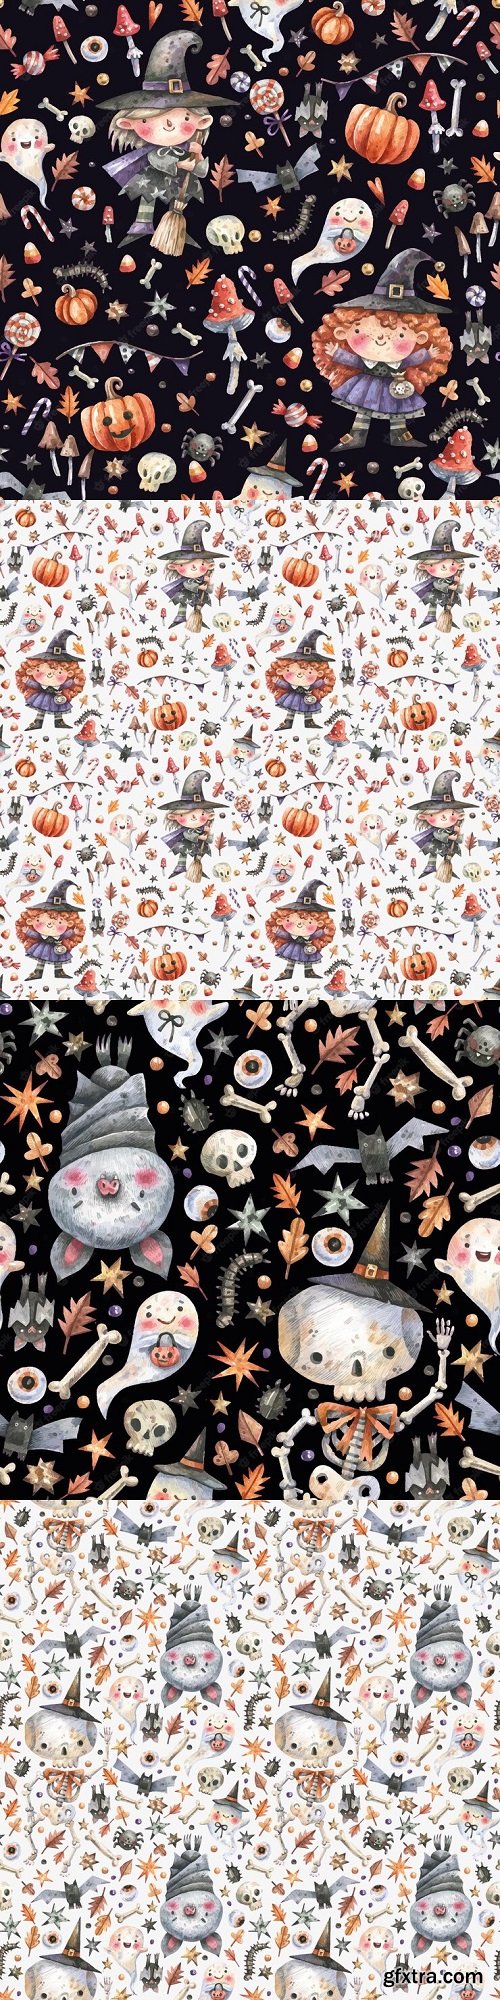 Seamless halloween pattern with skeletons, skulls, bats in cartoon style